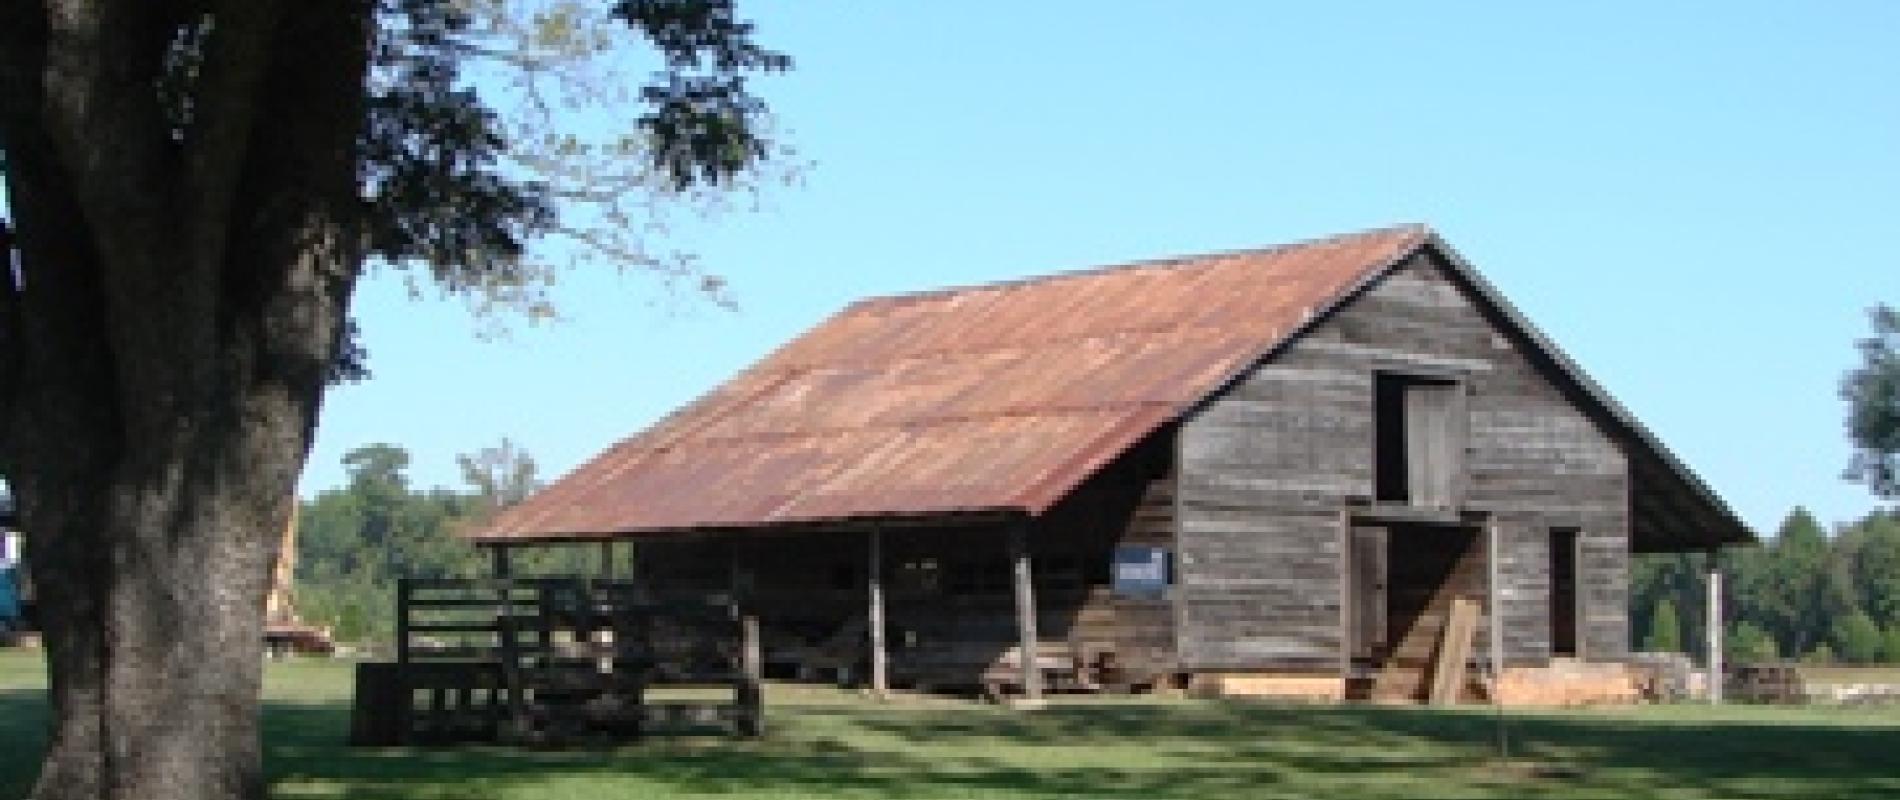 Restored Farm Building